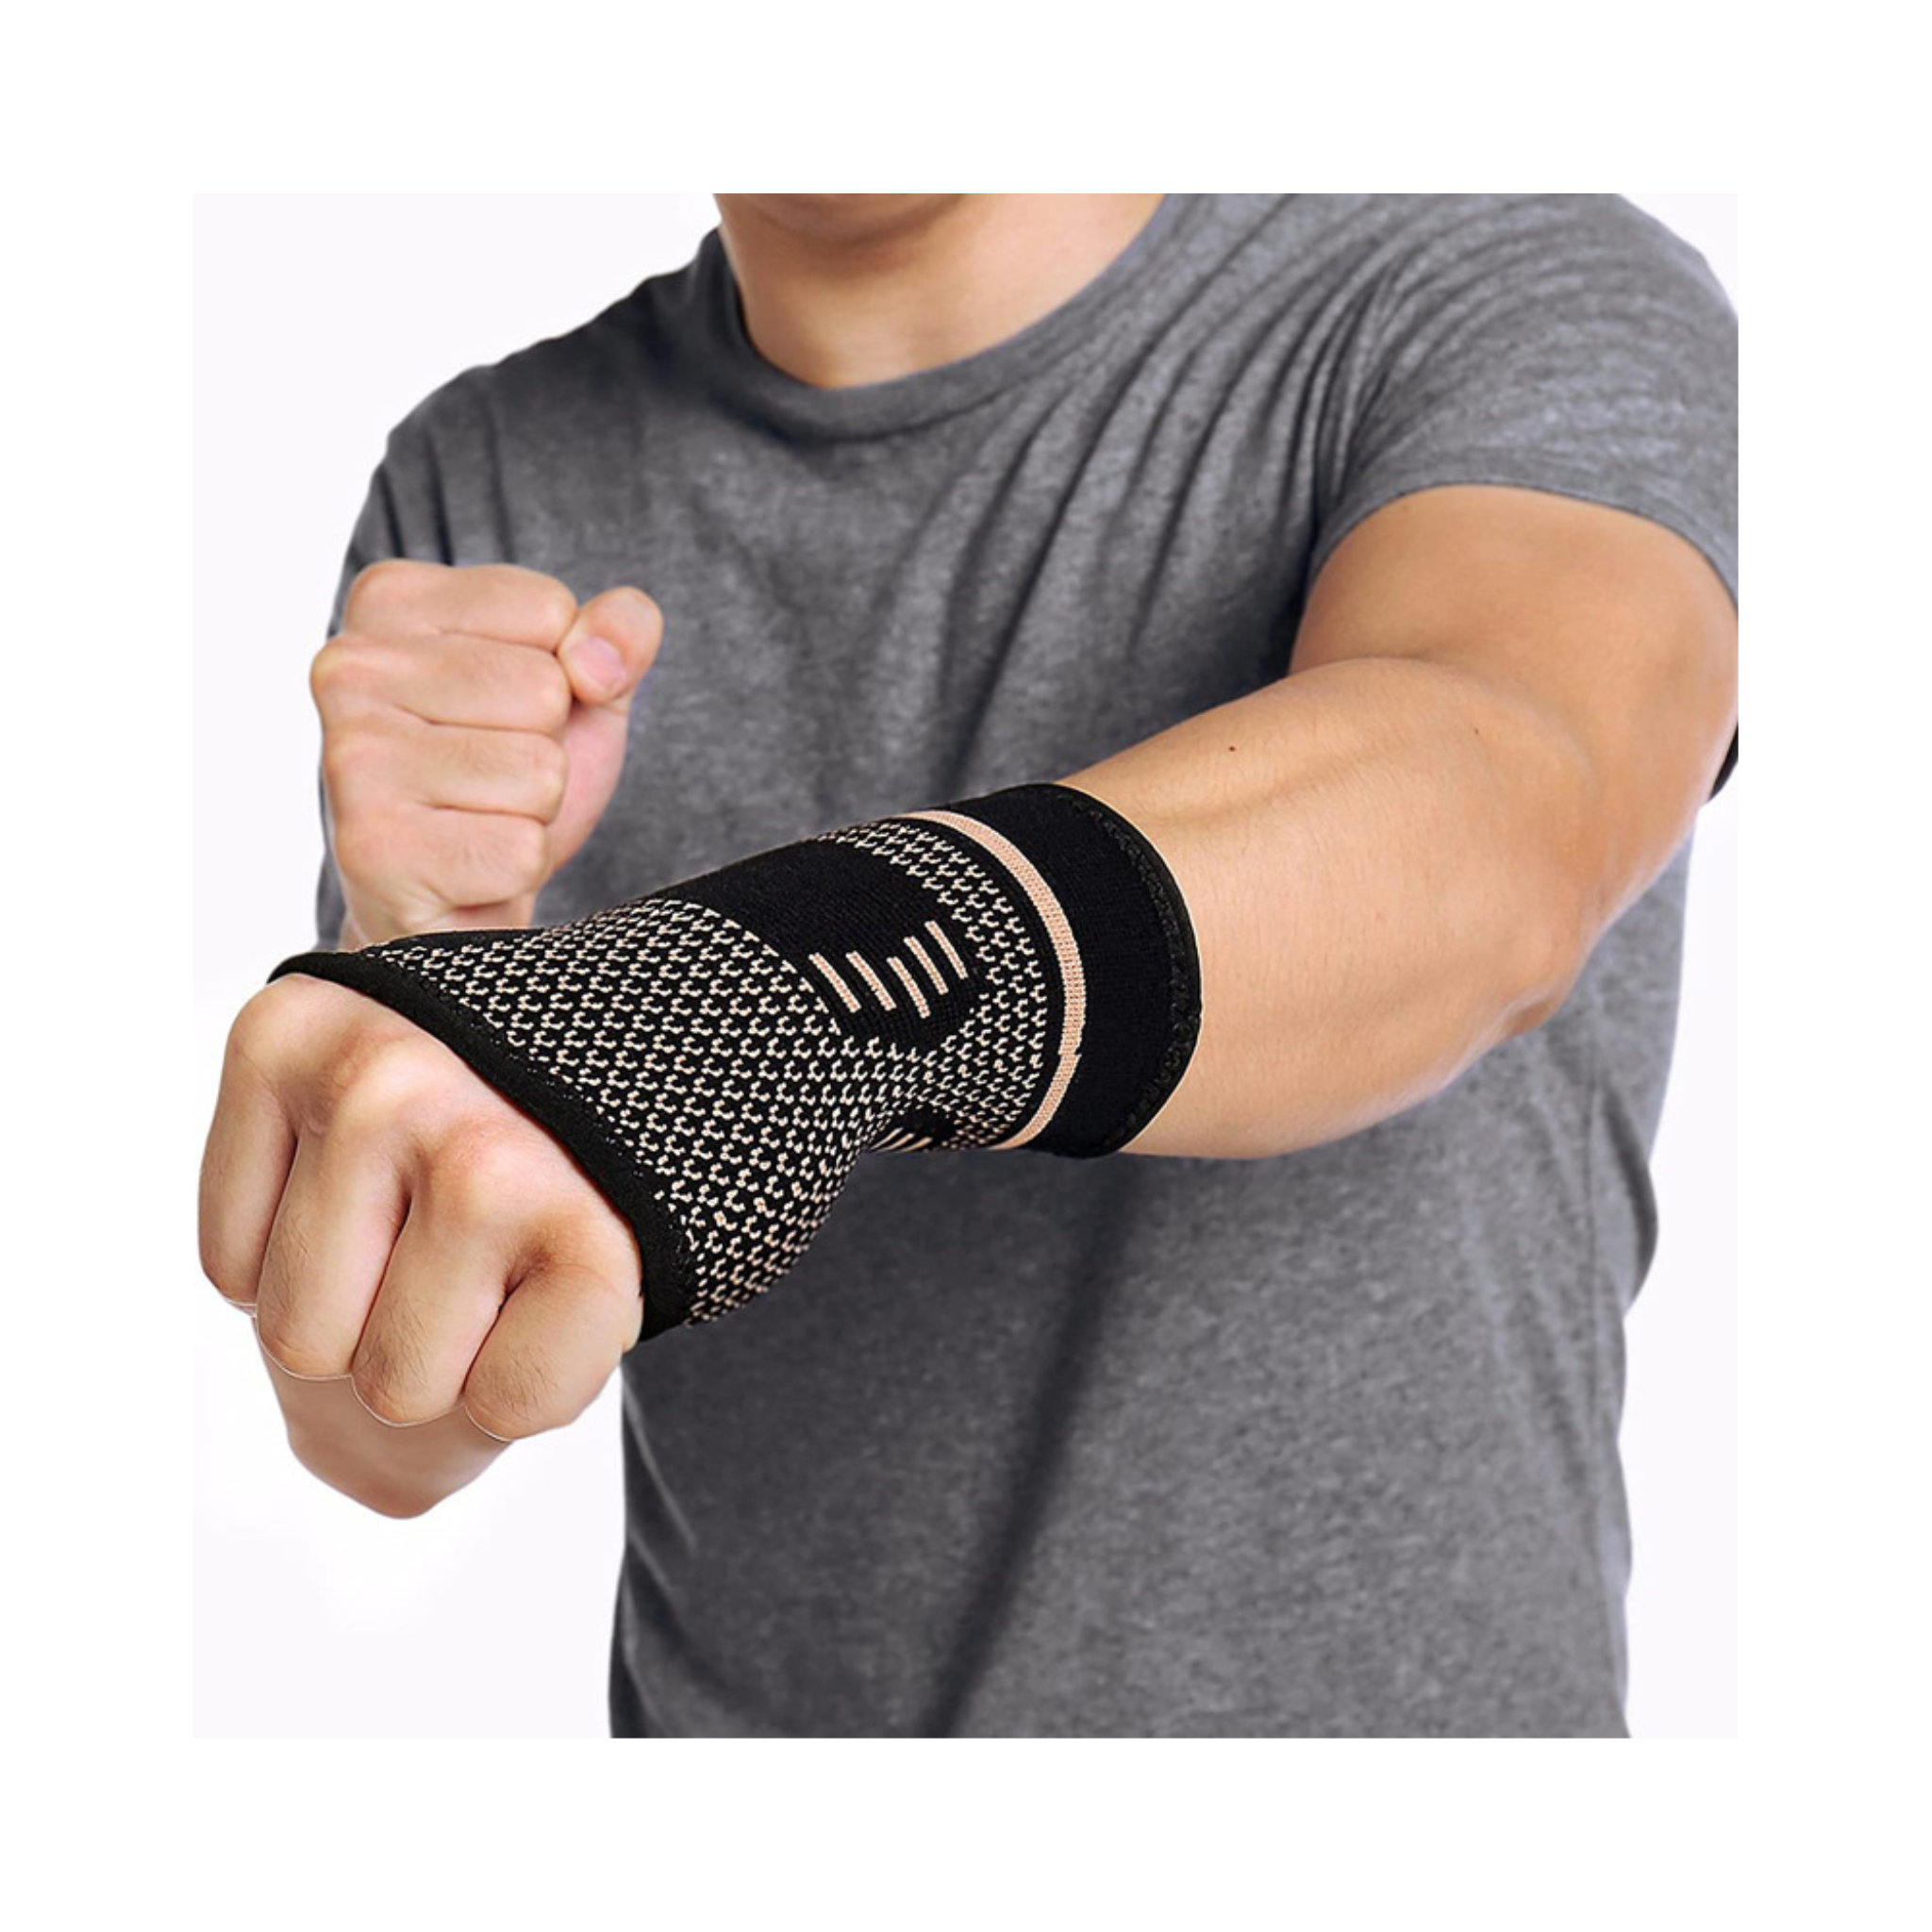 Wrist Brace, Compression Brace Sleeve Support